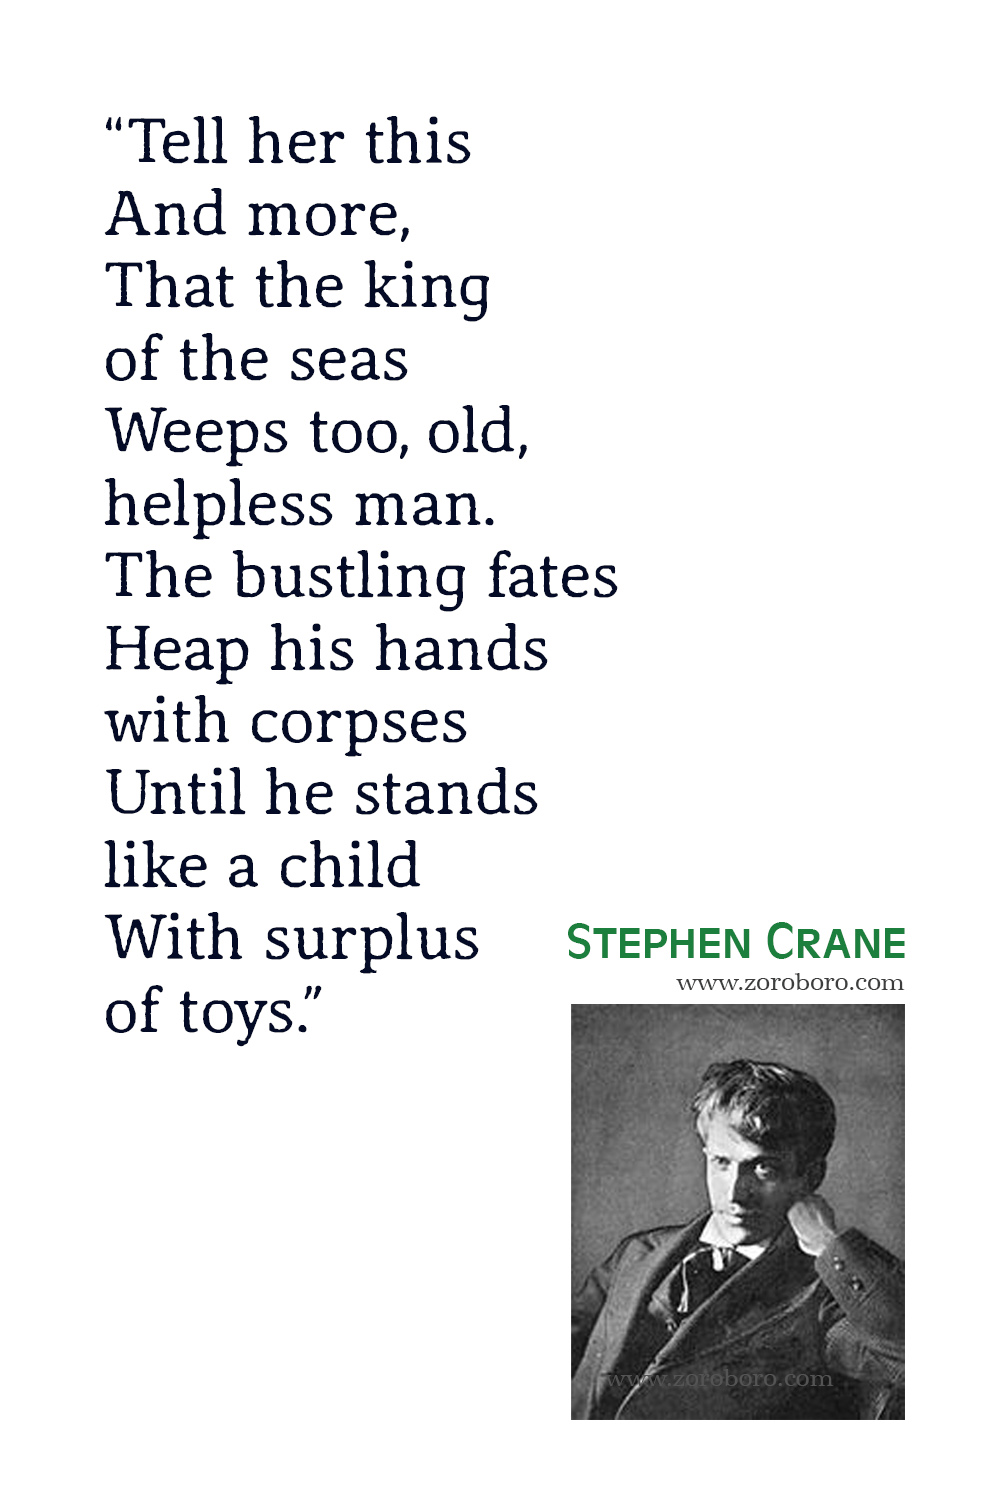 Stephen Crane Quotes, Stephen Crane Poems, Stephen Crane The Red Badge of Courage, Short Stories - Stephen Crane, Stephen Crane Poetry.